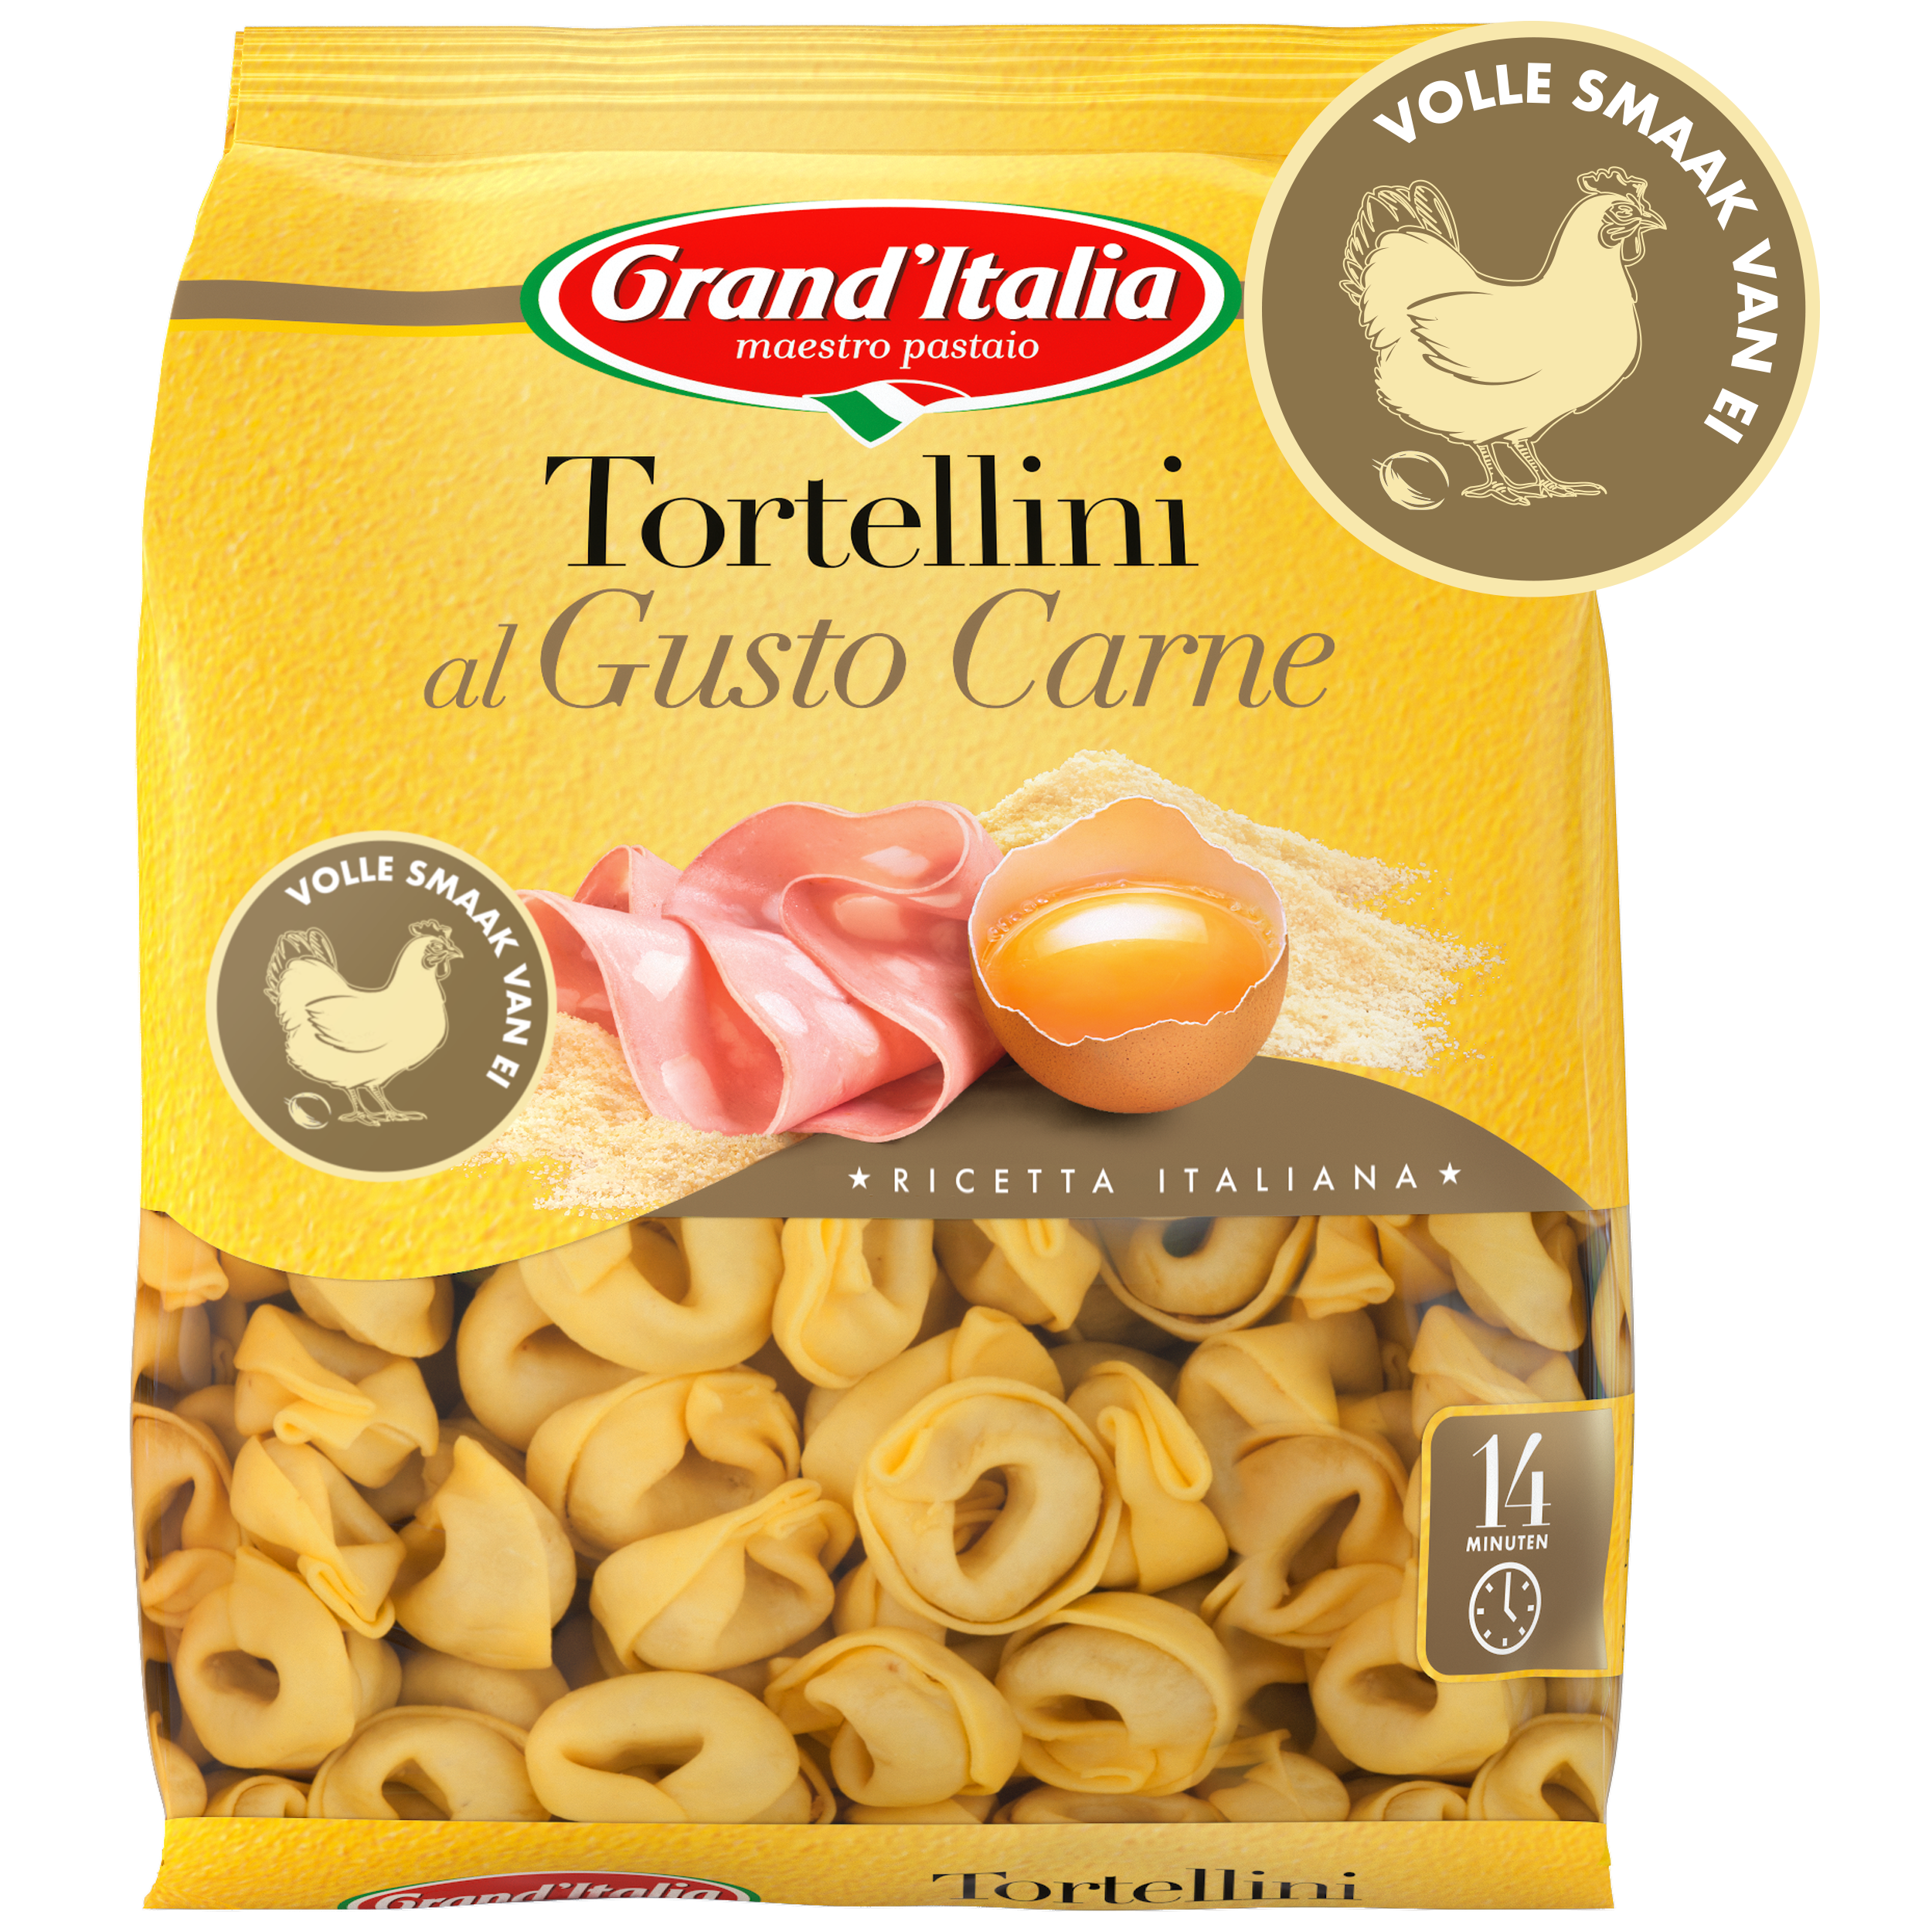 Pasta Tortellini al Gusto Carne 440g claim Grand'Italia